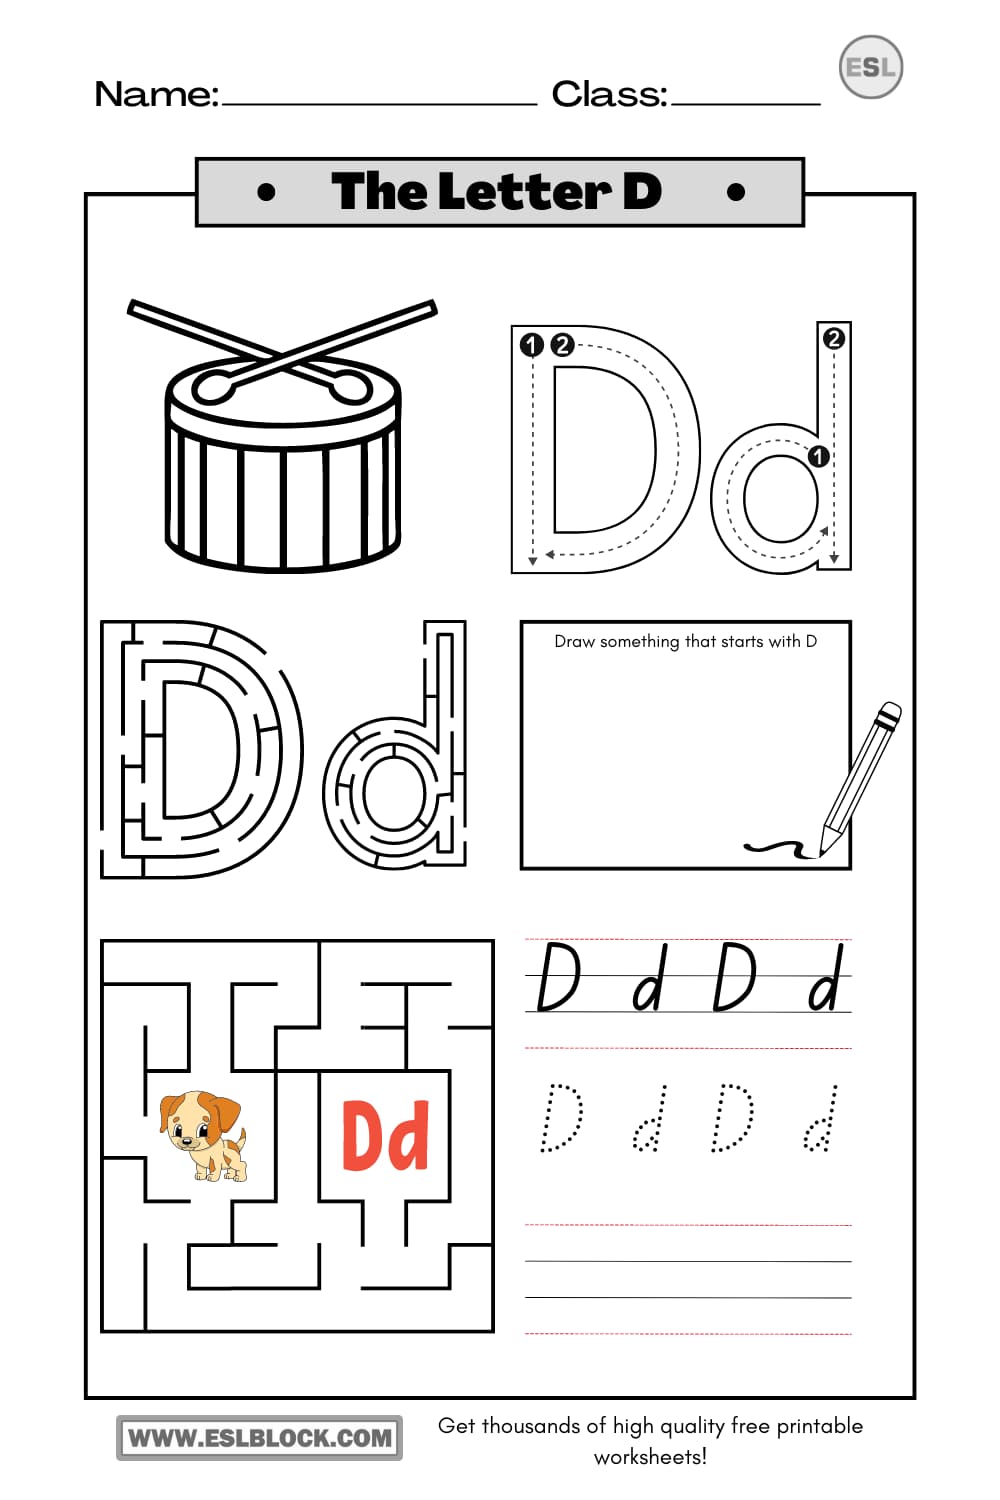 Alphabet D Printable Worksheets, Free Worksheets, Kindergarten Worksheets, Letter D Printable Worksheets, Preschool Worksheets, Tracing the Letter D, Tracing the letter D Printable, Tracing the Letter D Worksheets, Tracing Worksheets, Worksheets